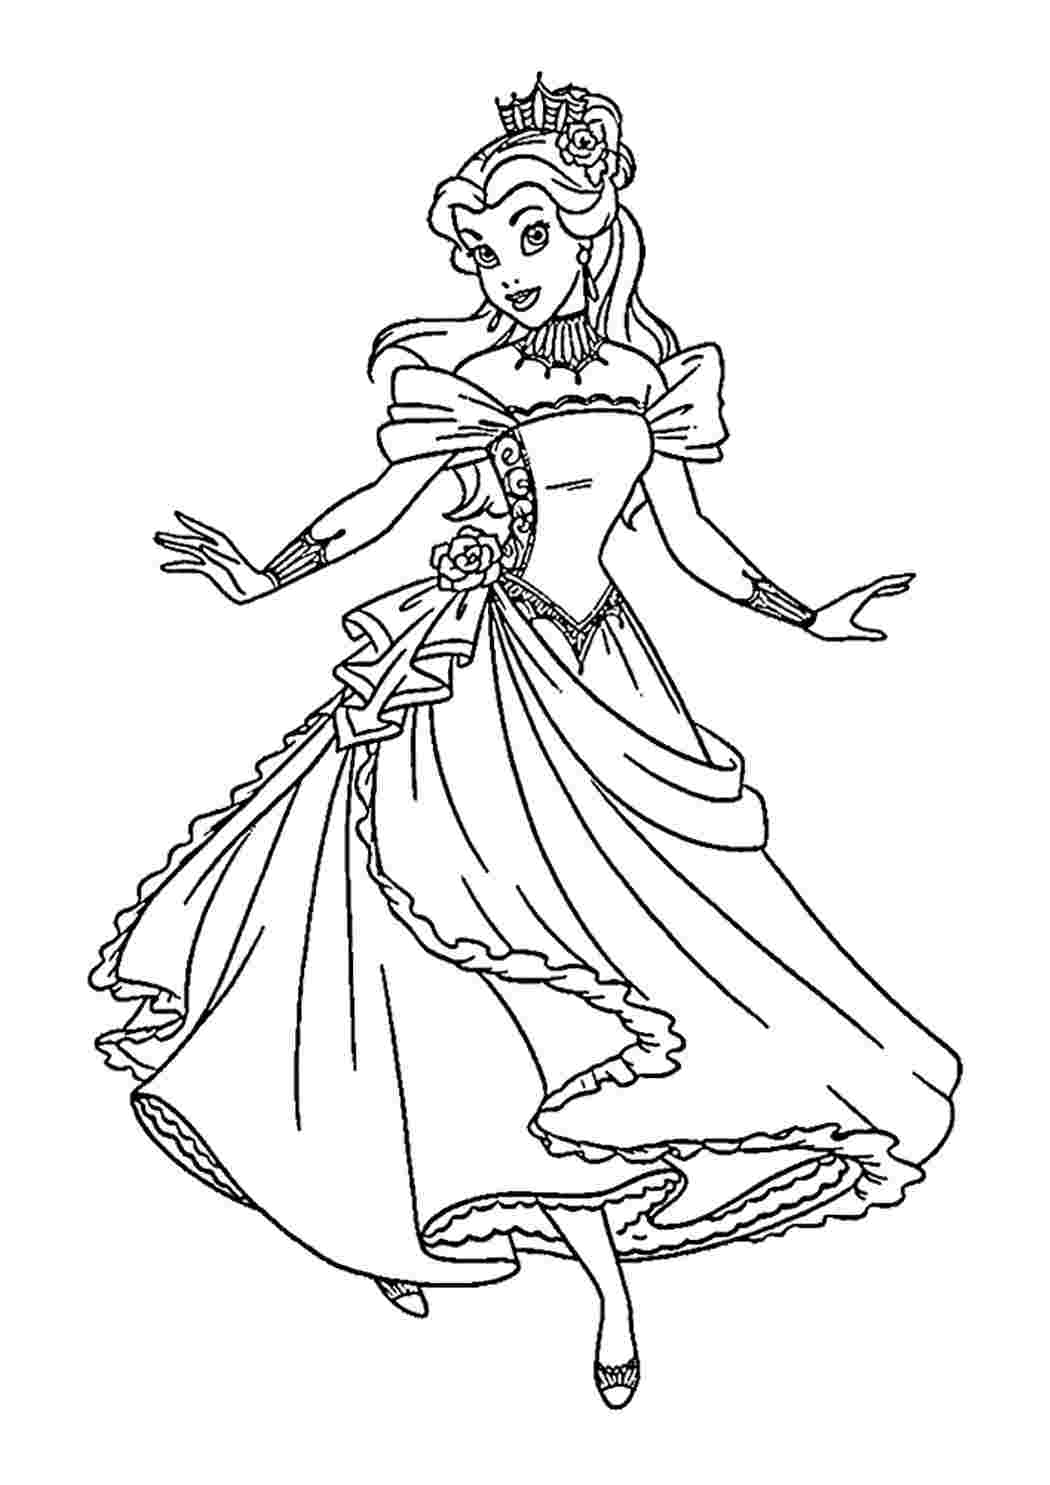 Раскраска Принцесса Белль | Раскраски из мультфильма Красавица и чудовище (Beauty & Beast)